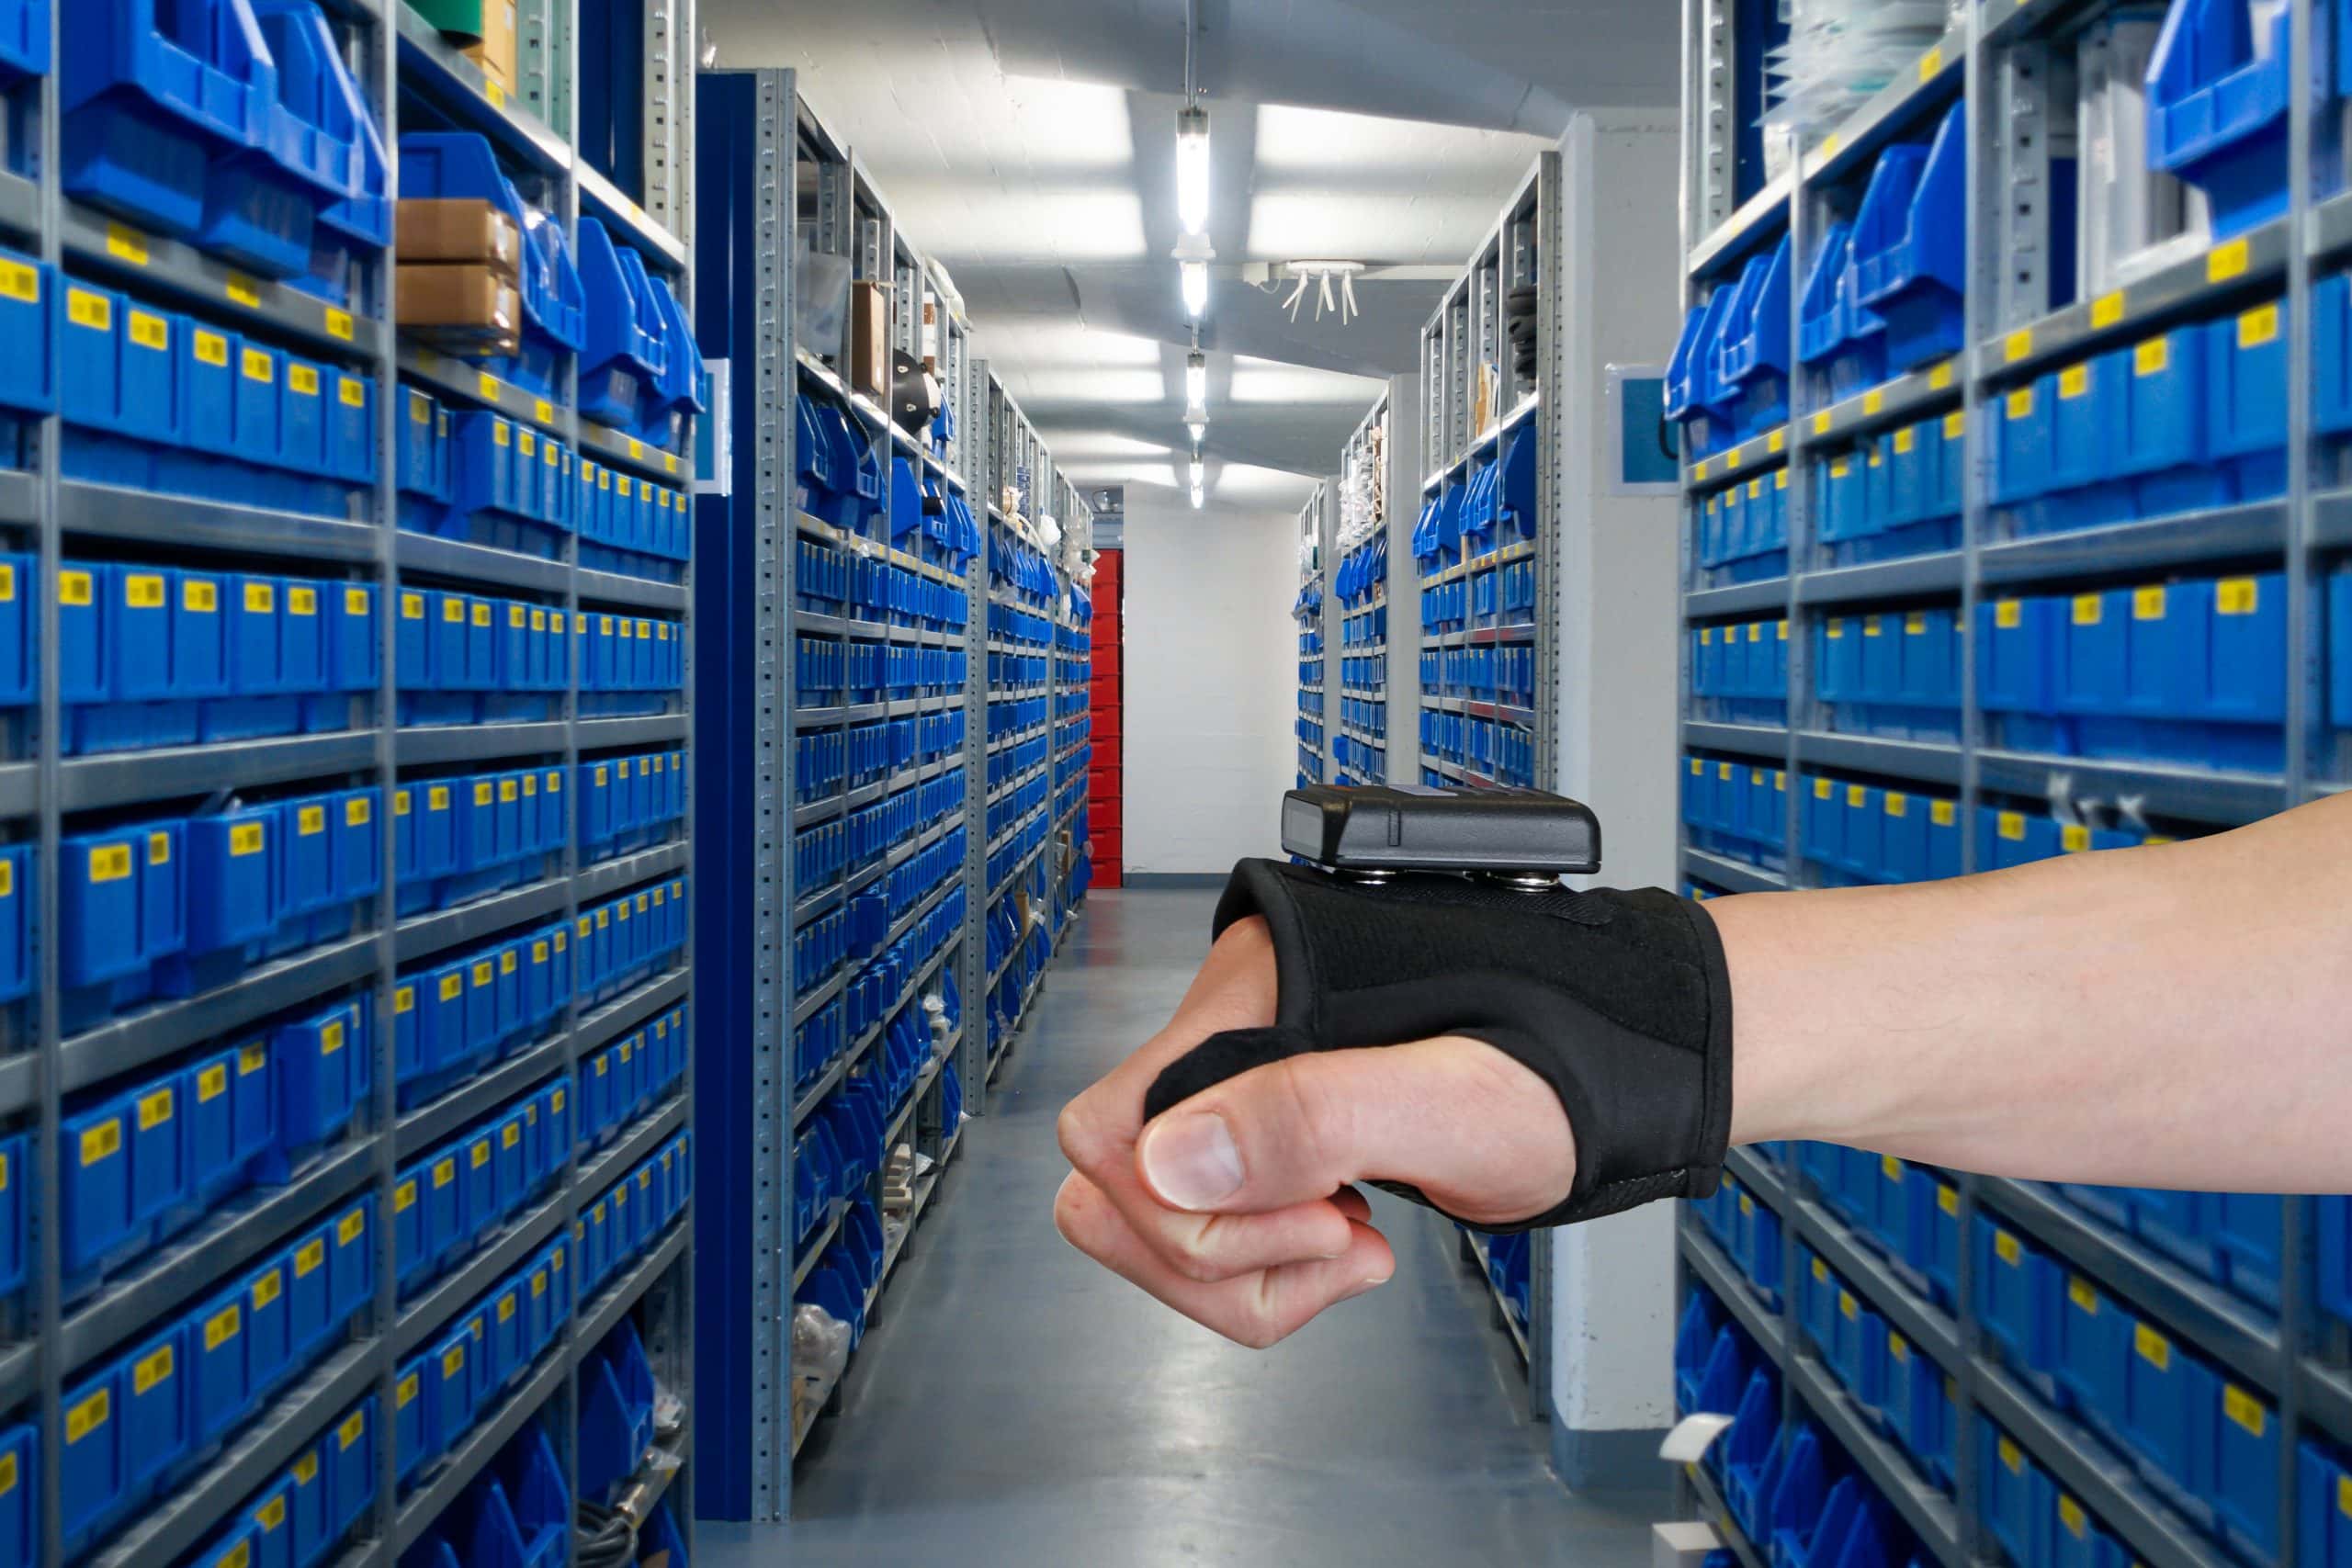 Wrist scanner HasciSE for logistics applications